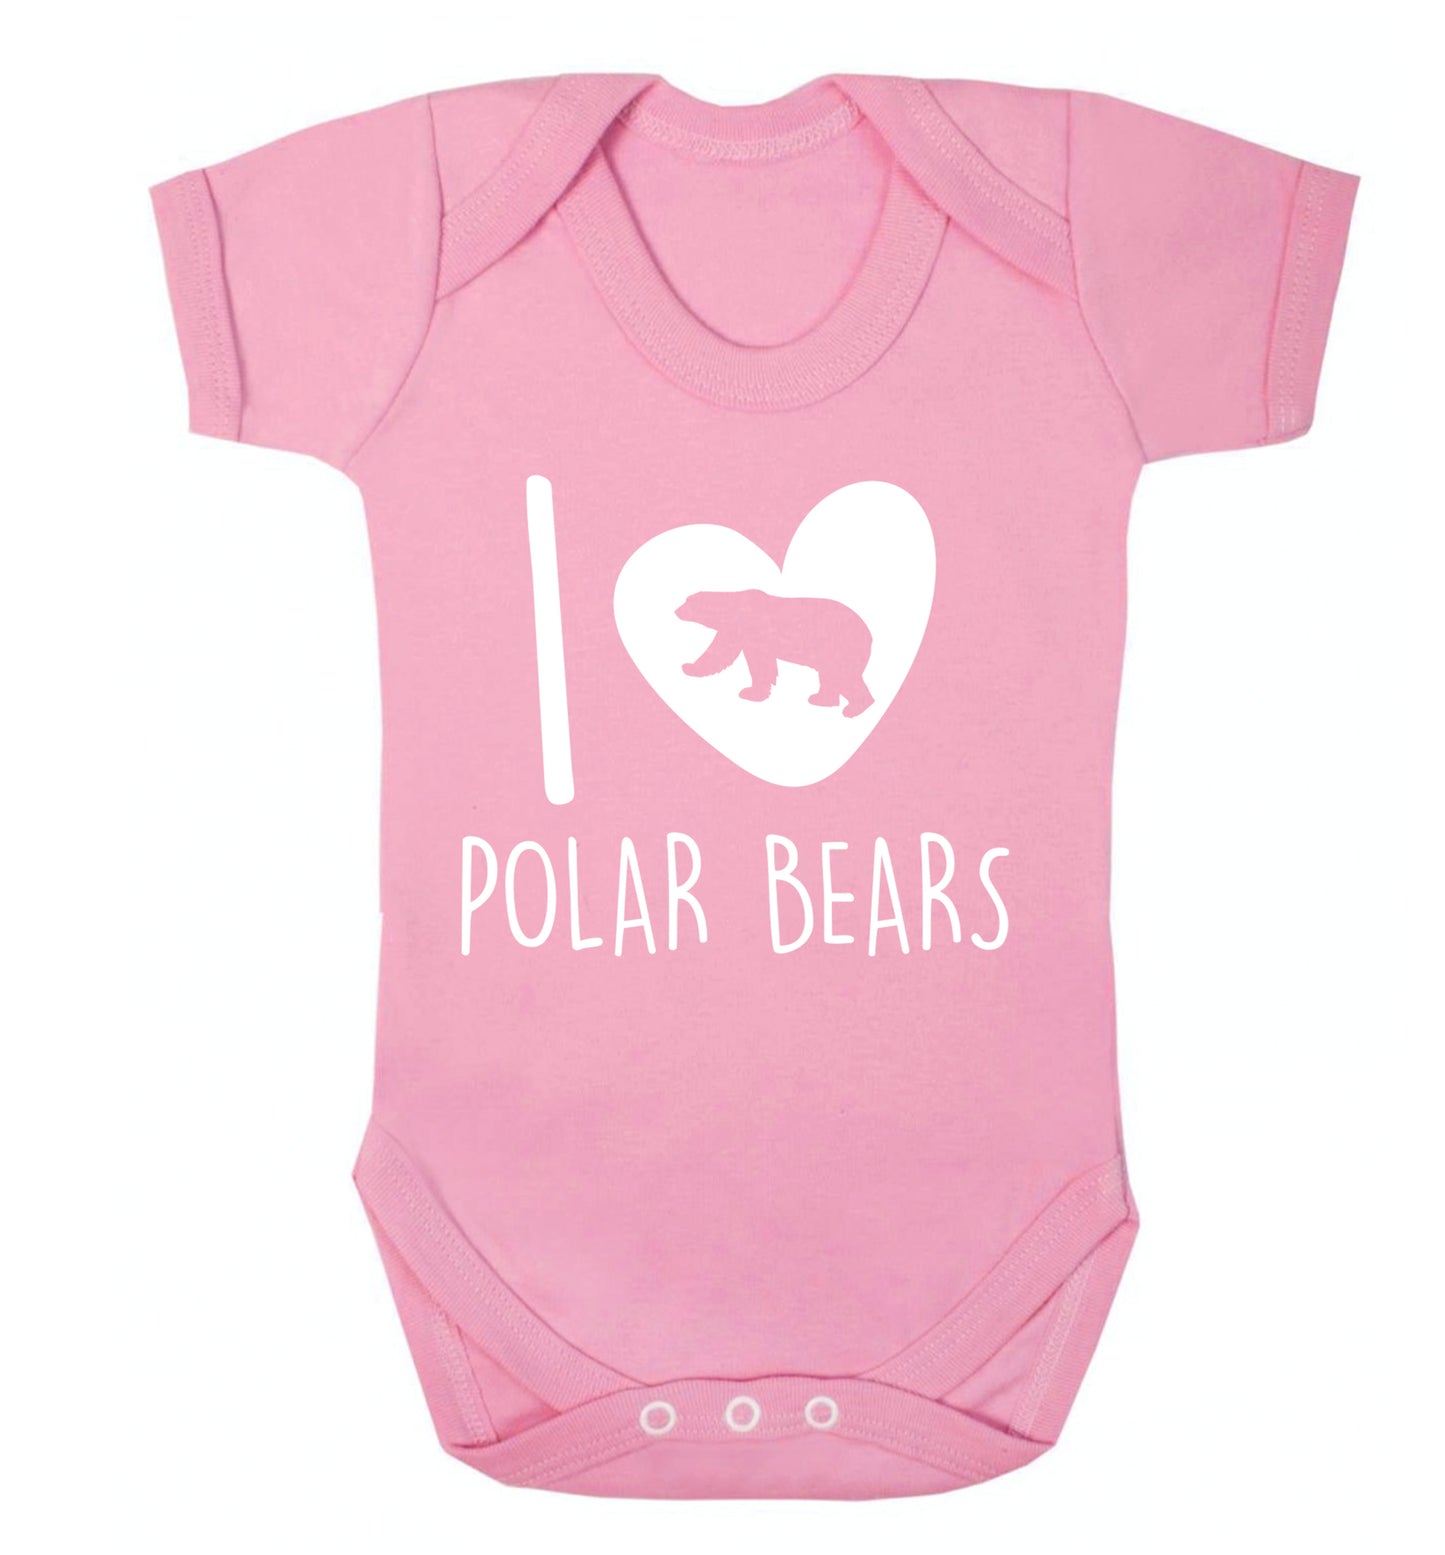 I Love Polar Bears Baby Vest pale pink 18-24 months